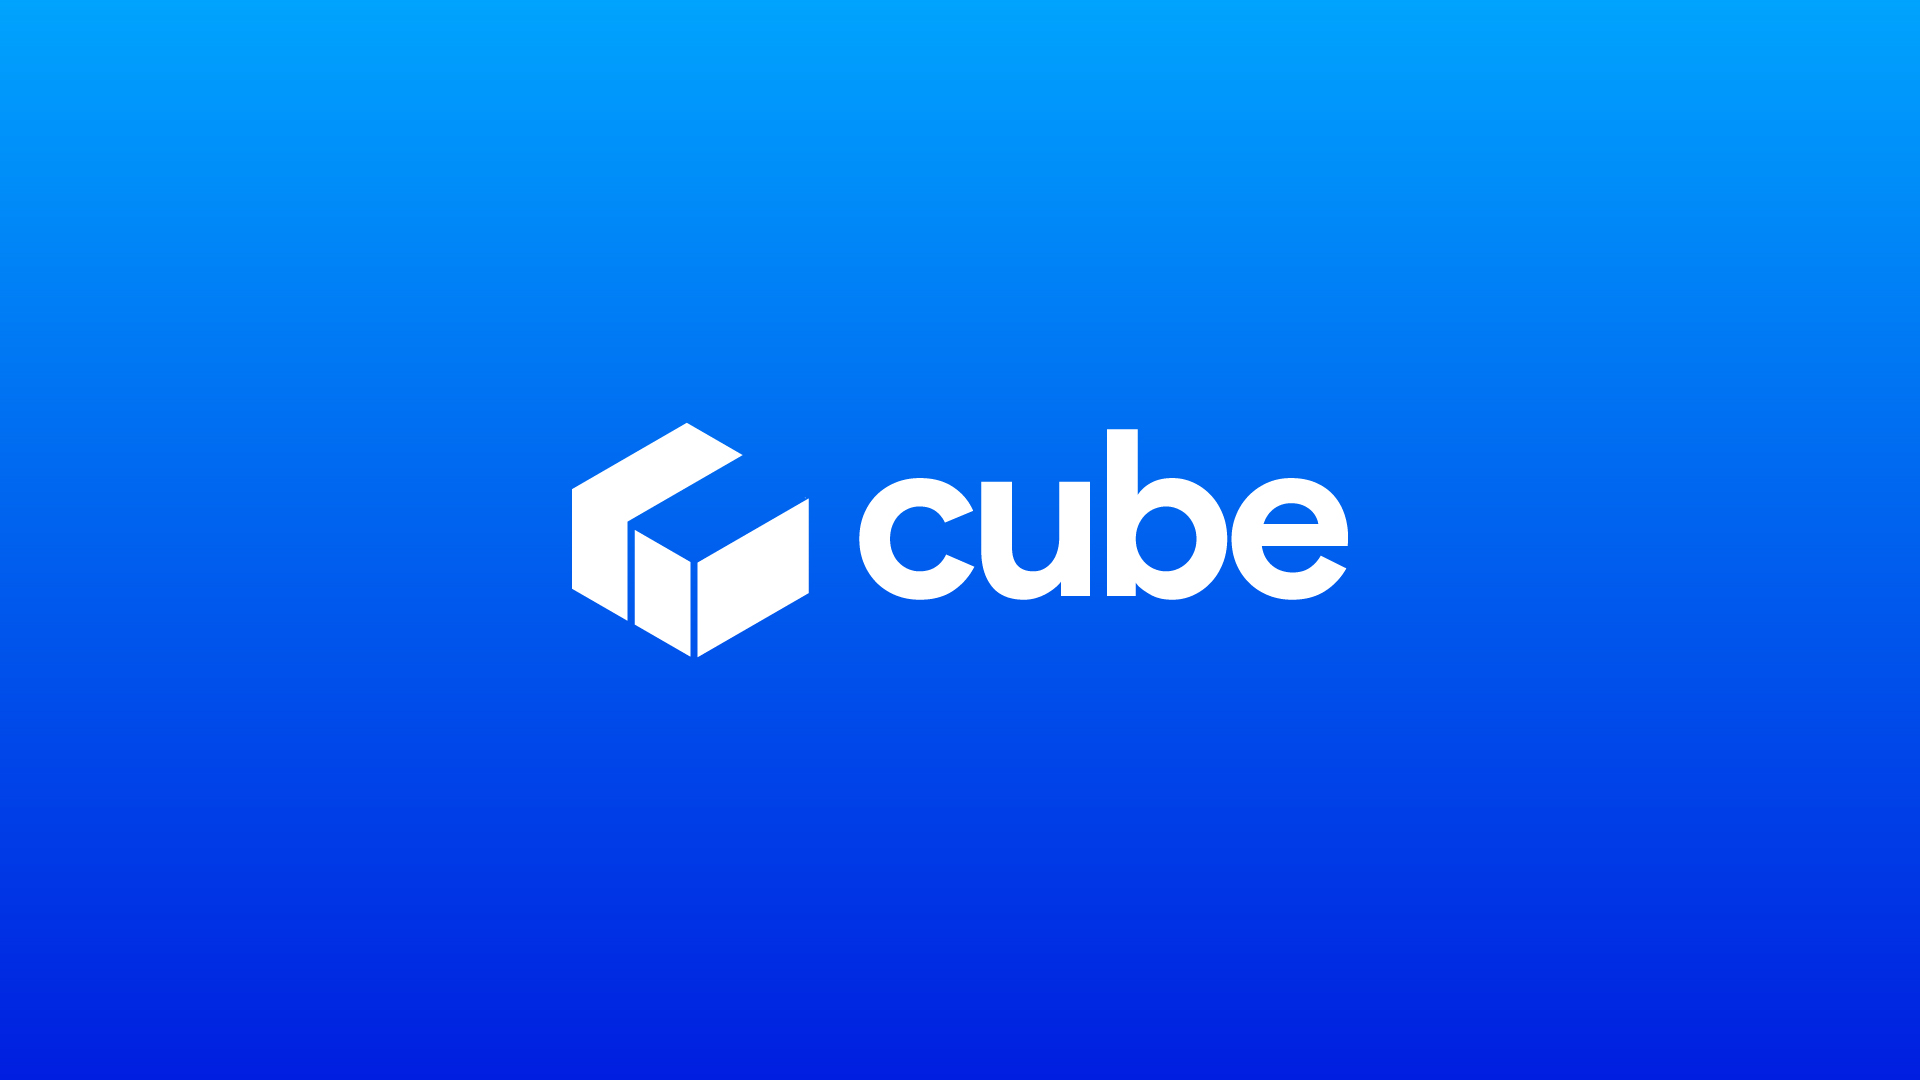 Cube logo design solid white